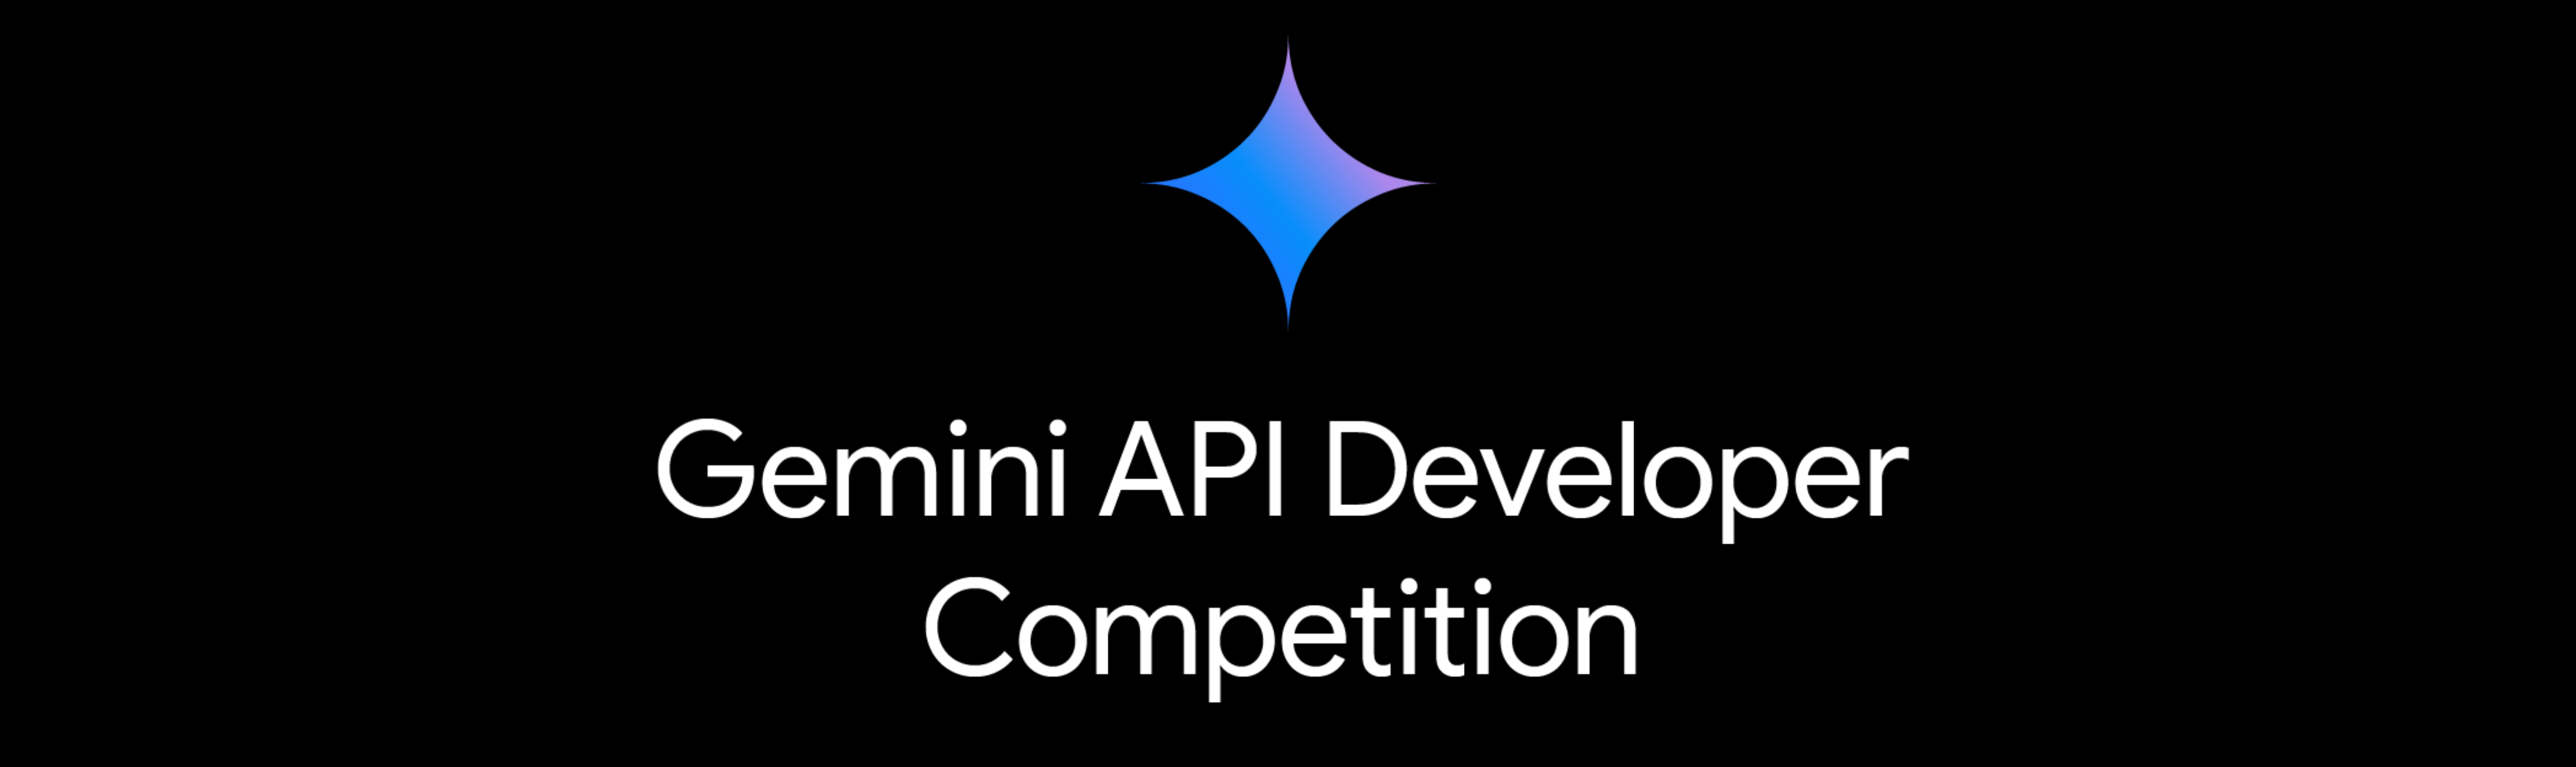 Gemini-API-Developer-Competition-Banner